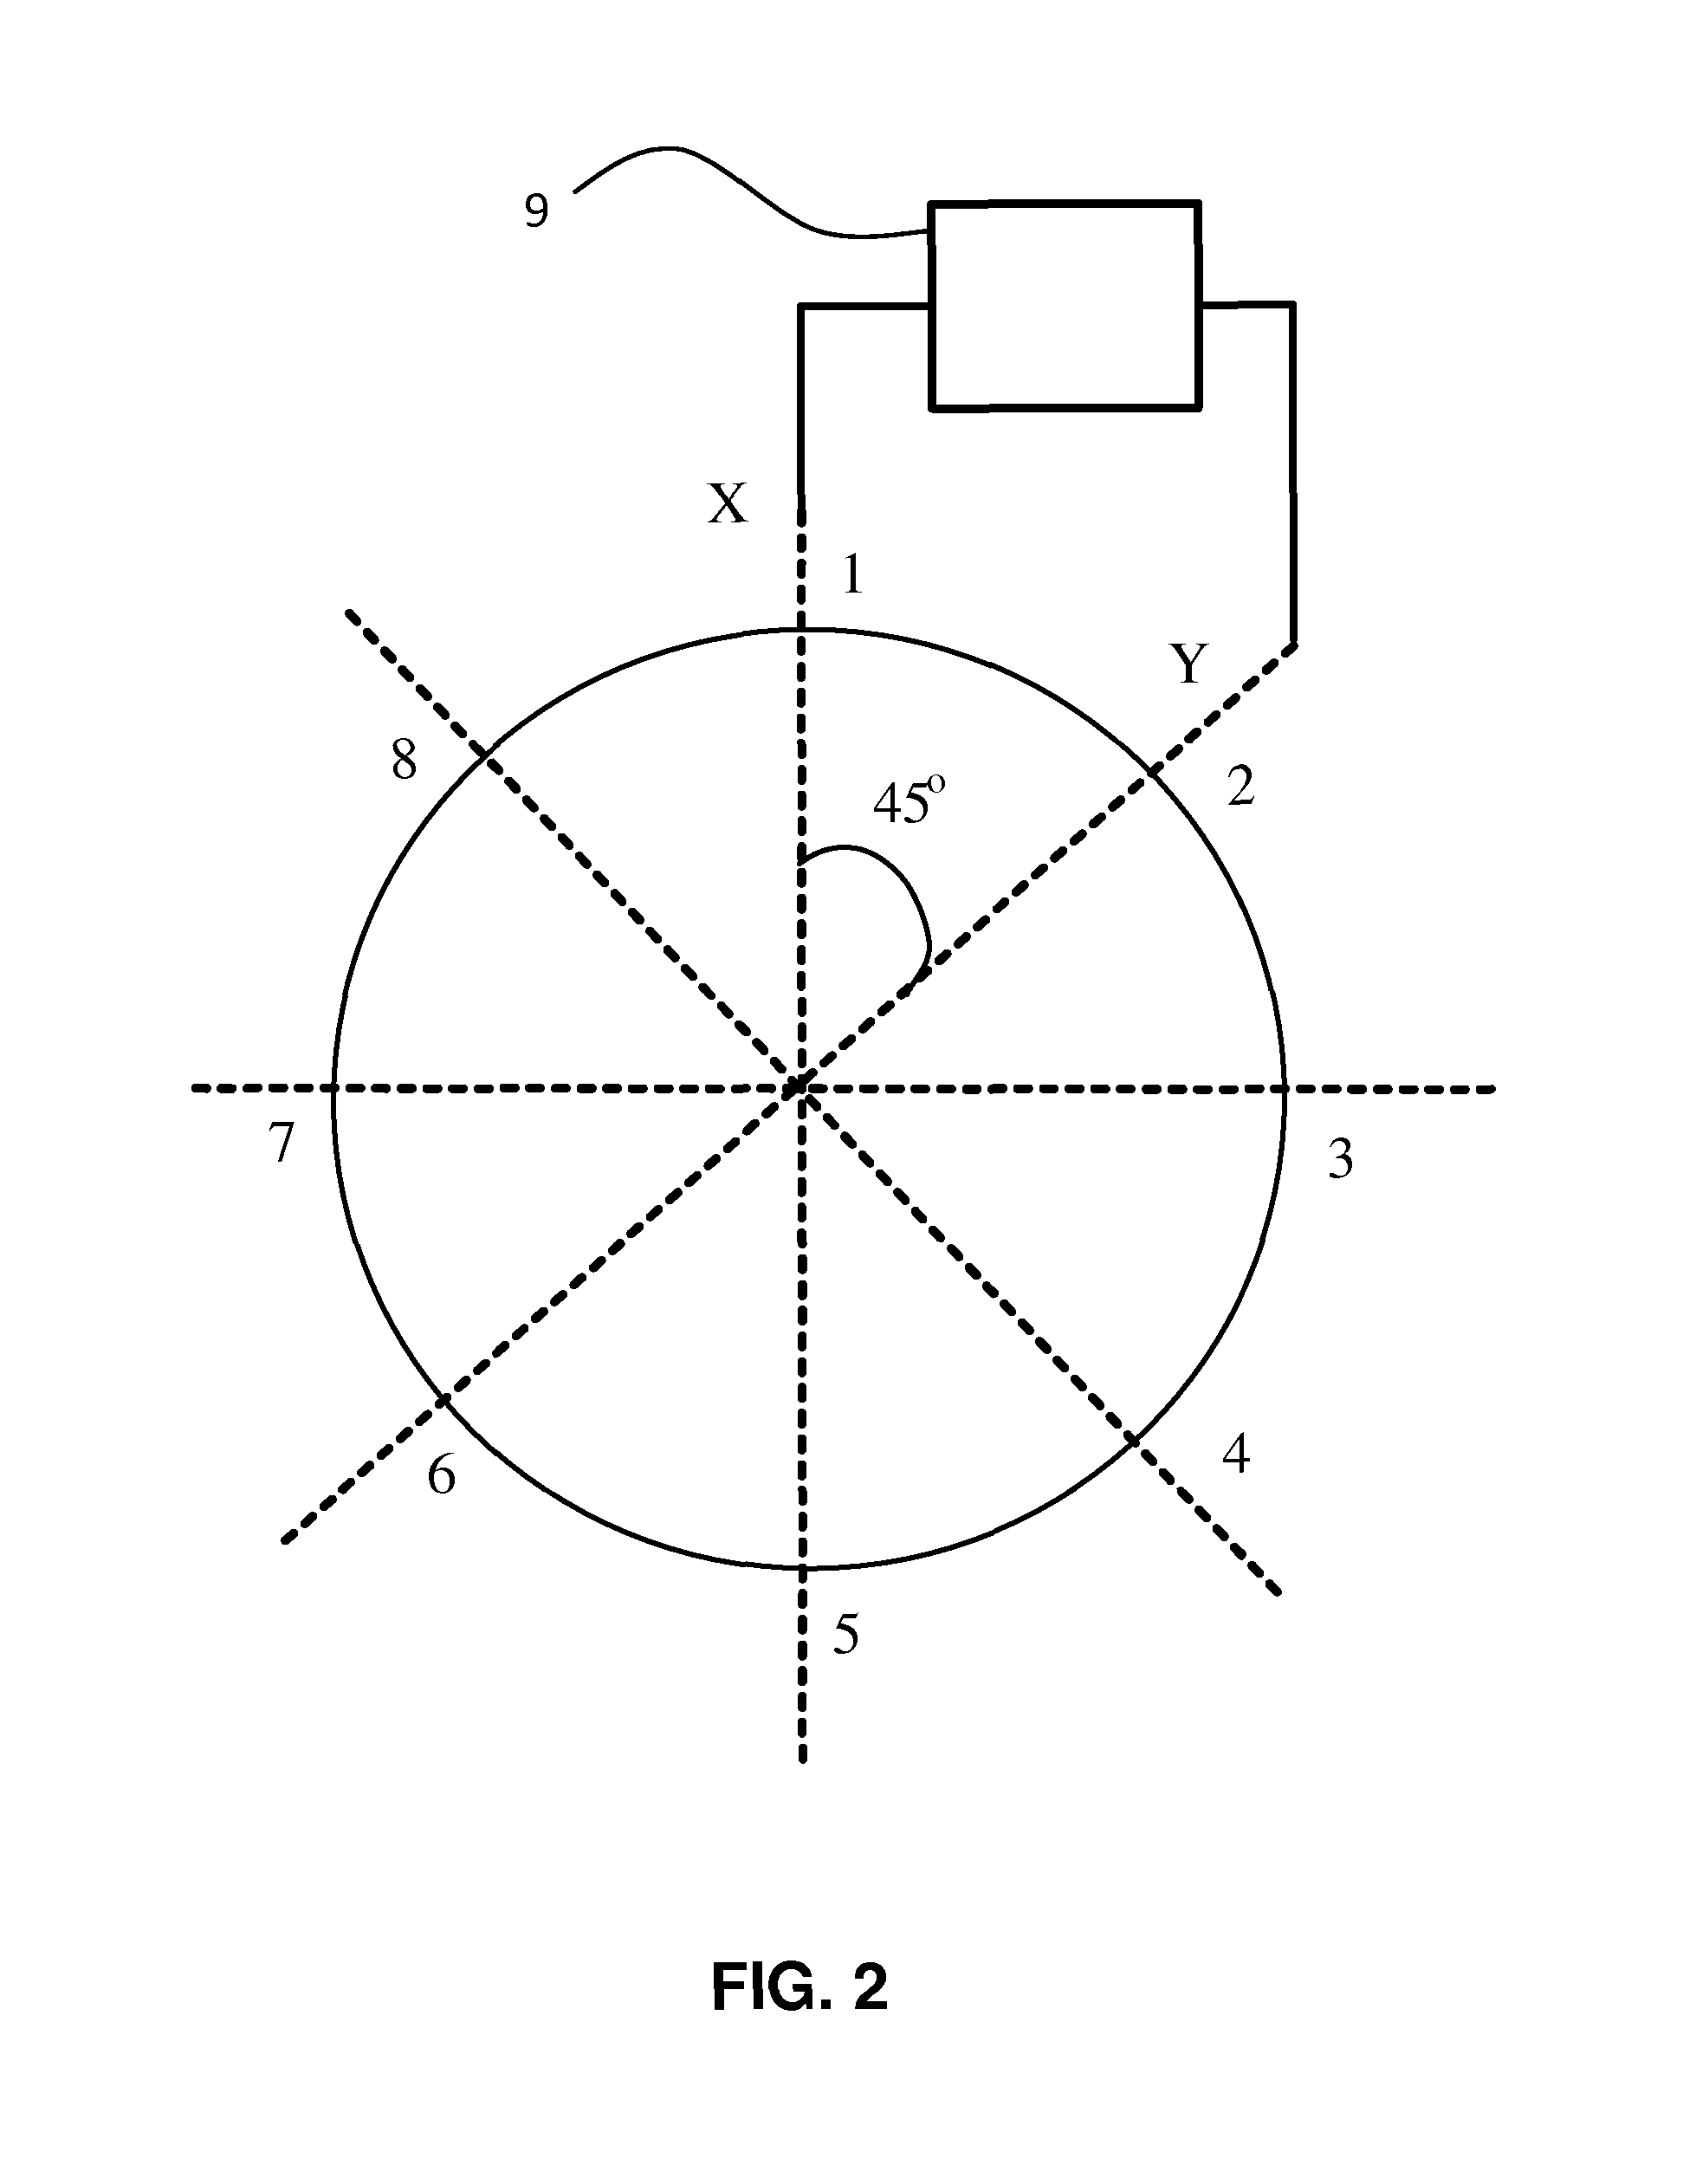 Force-rebalance coriolis vibratory gyroscope